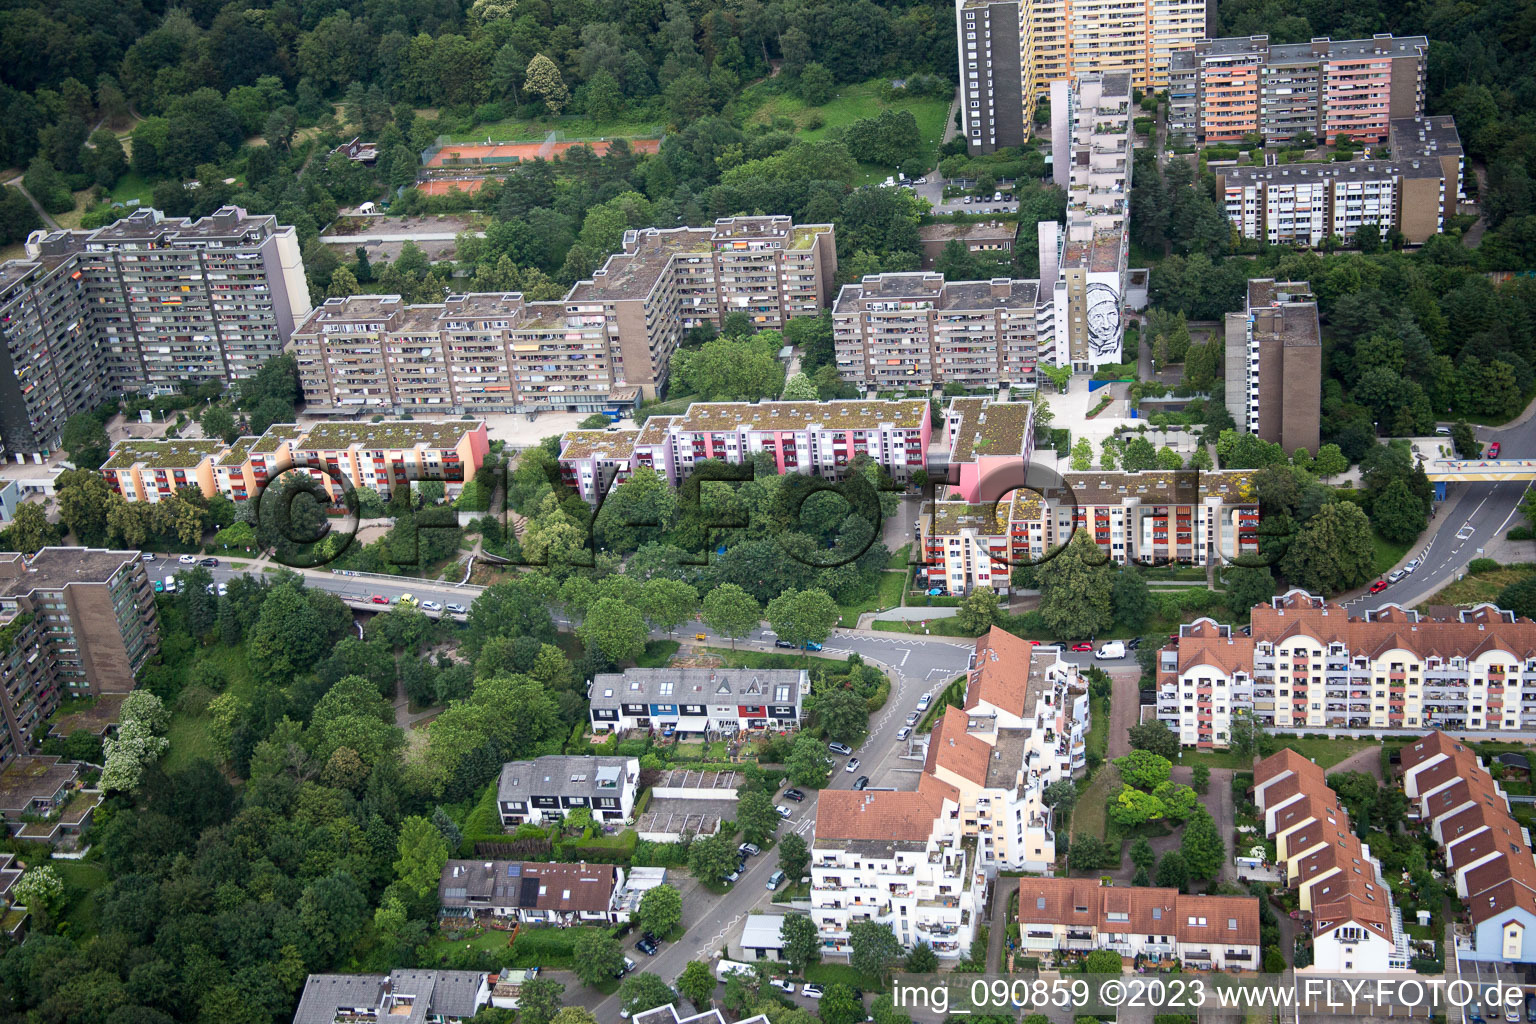 HD-Emmertsgrund in the district Emmertsgrund in Heidelberg in the state Baden-Wuerttemberg, Germany seen from above